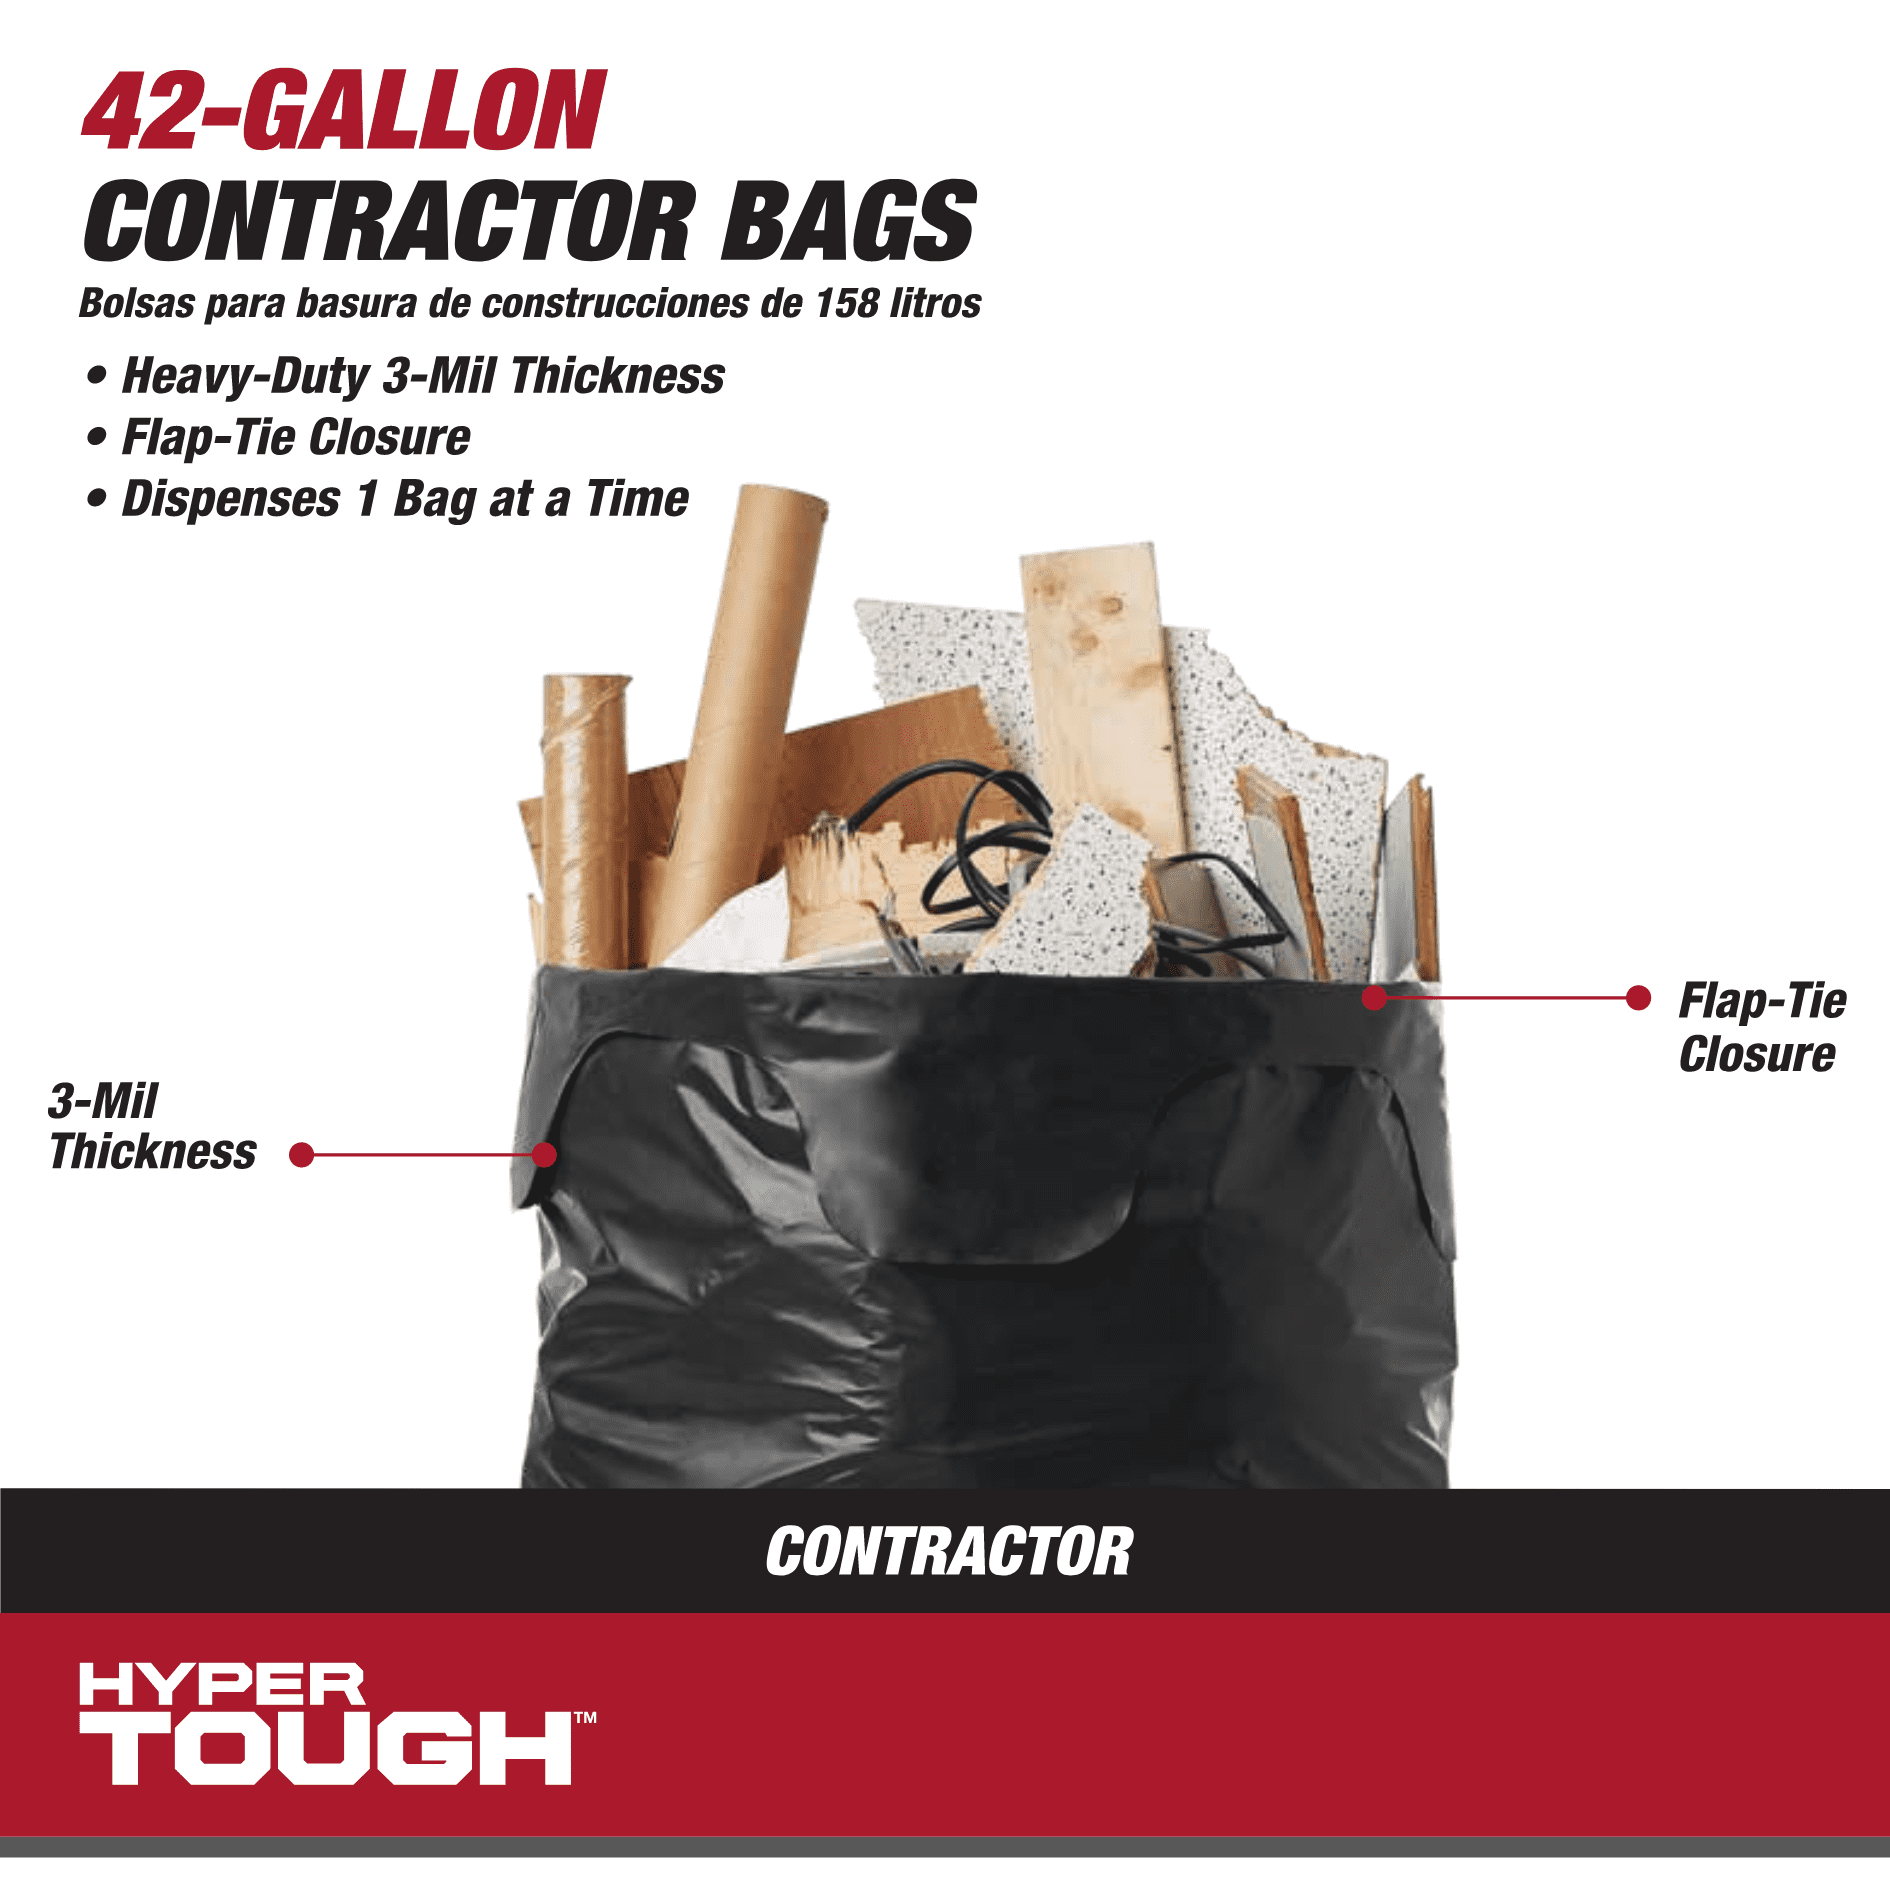 Hyper Tough Contractor Cleanup Bags Trash Bags, 45 Gallon Capacity